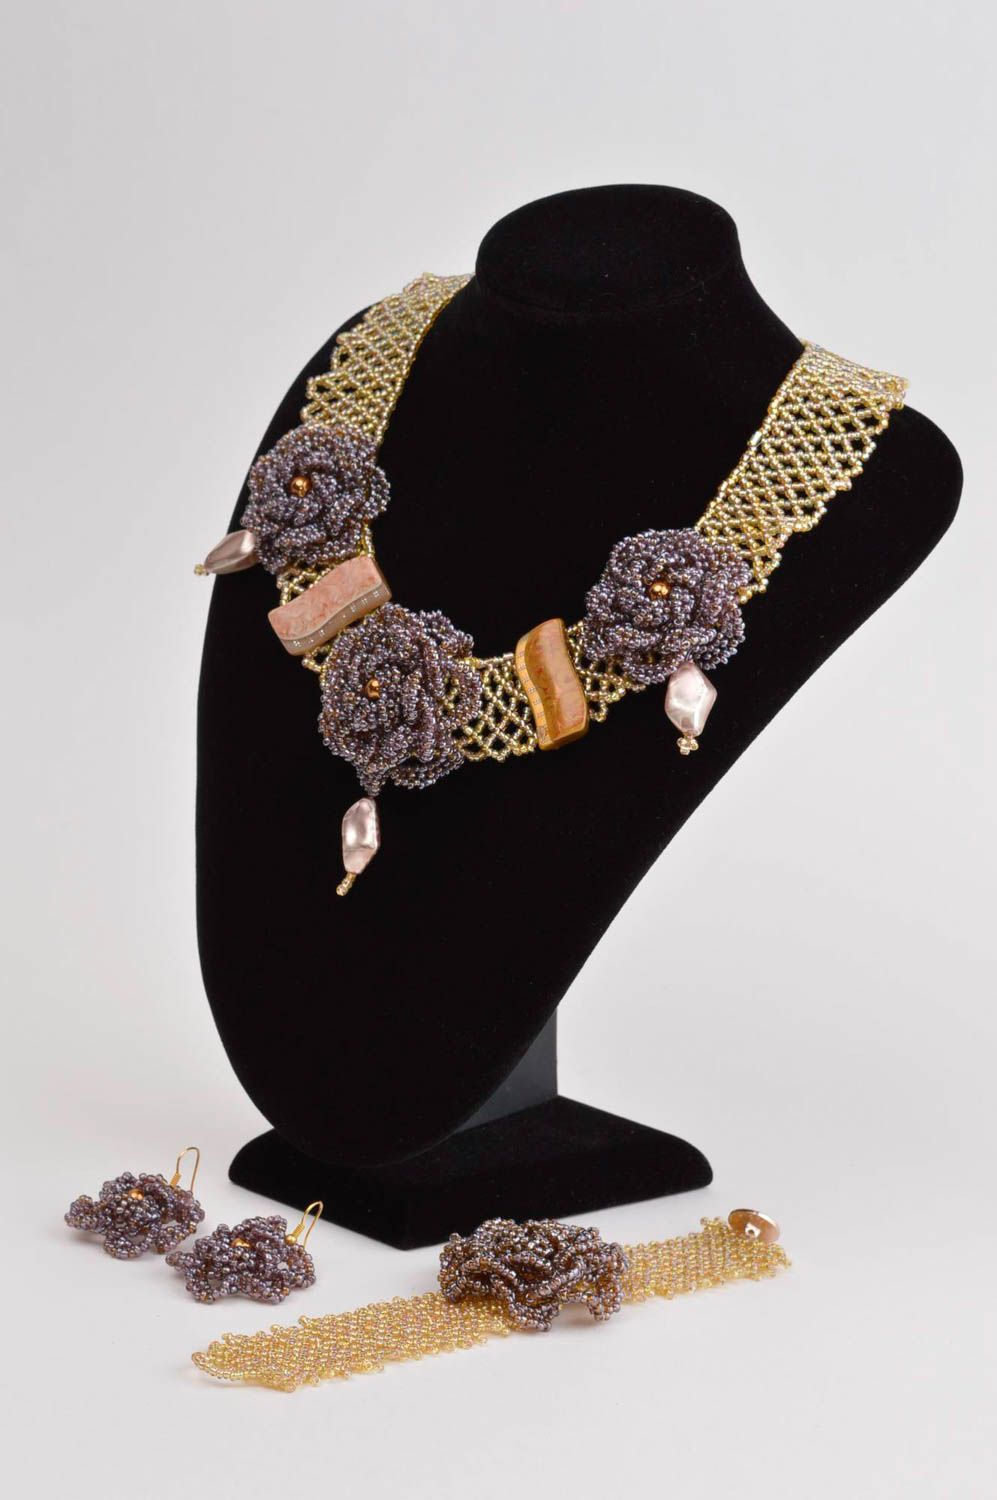 Handmade beaded necklace earrings bracelet designs artisan jewelry set photo 1